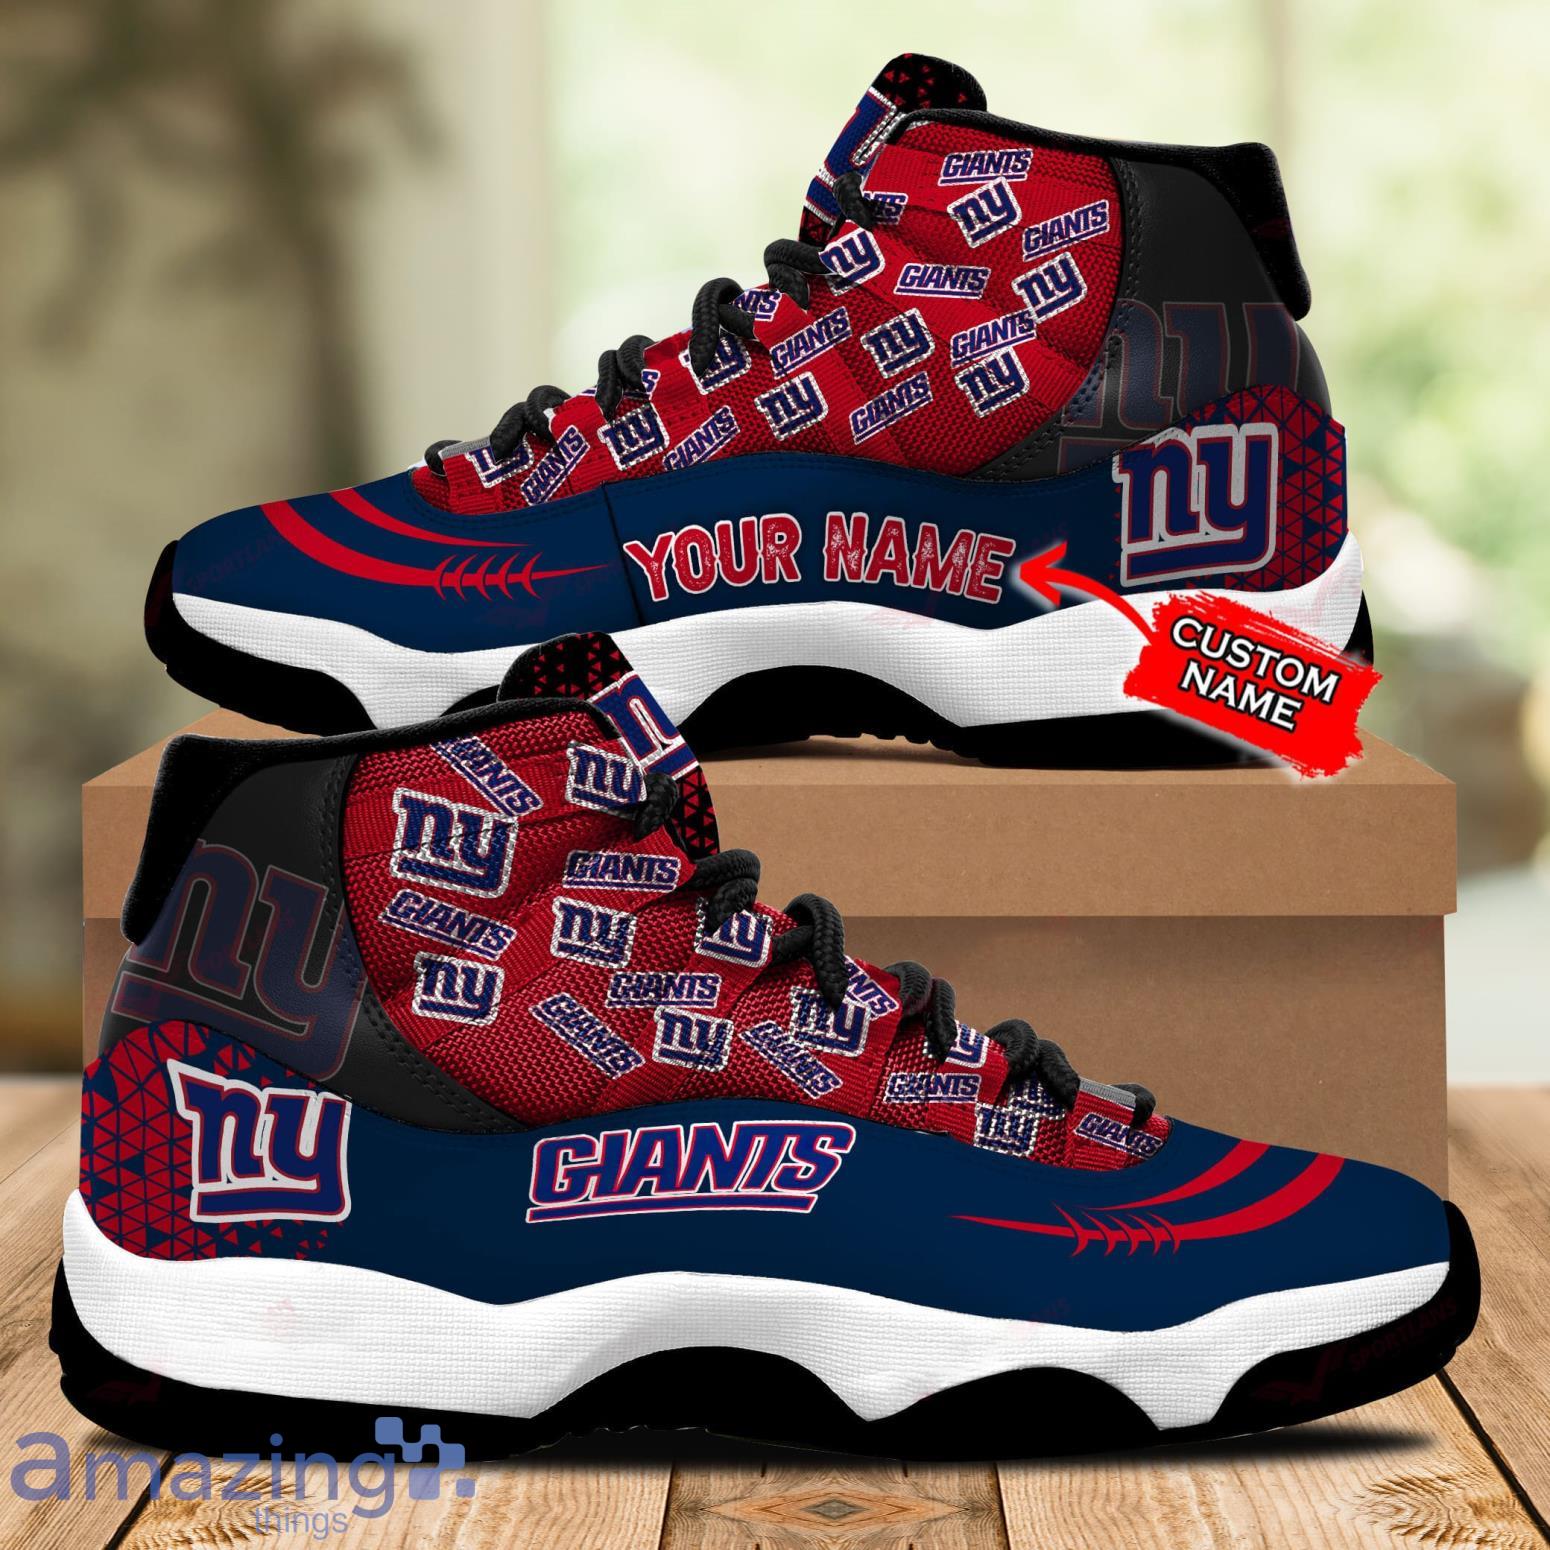 New York Giants NFL Custom Name Air Jordan 11 Sneakers Shoes For Fans